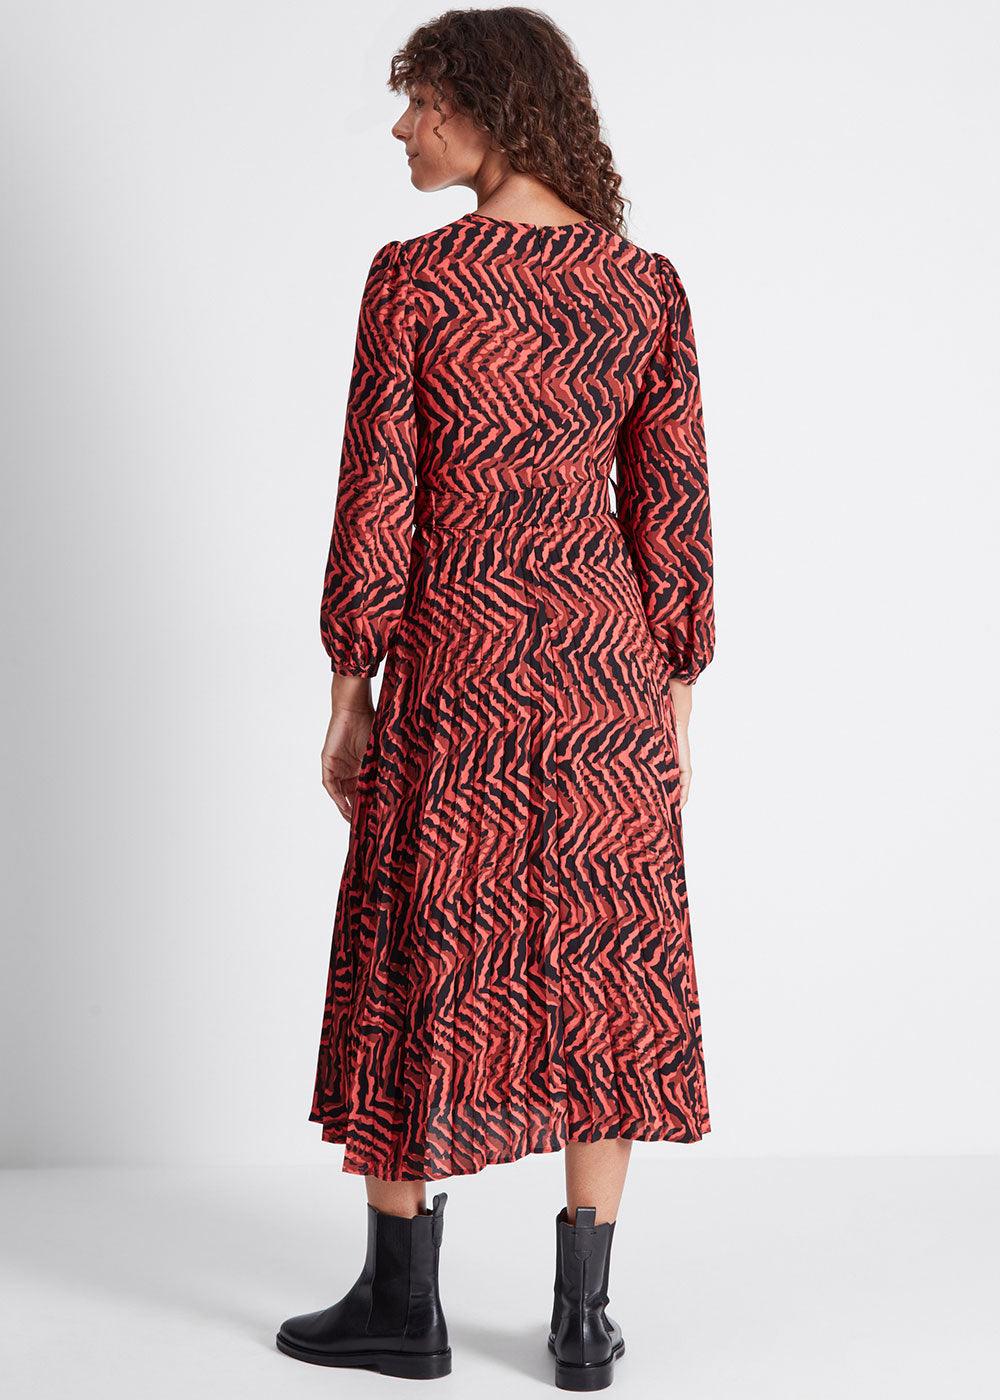 Sonder Studio Berry Animal Print Dress - Justina Clothing